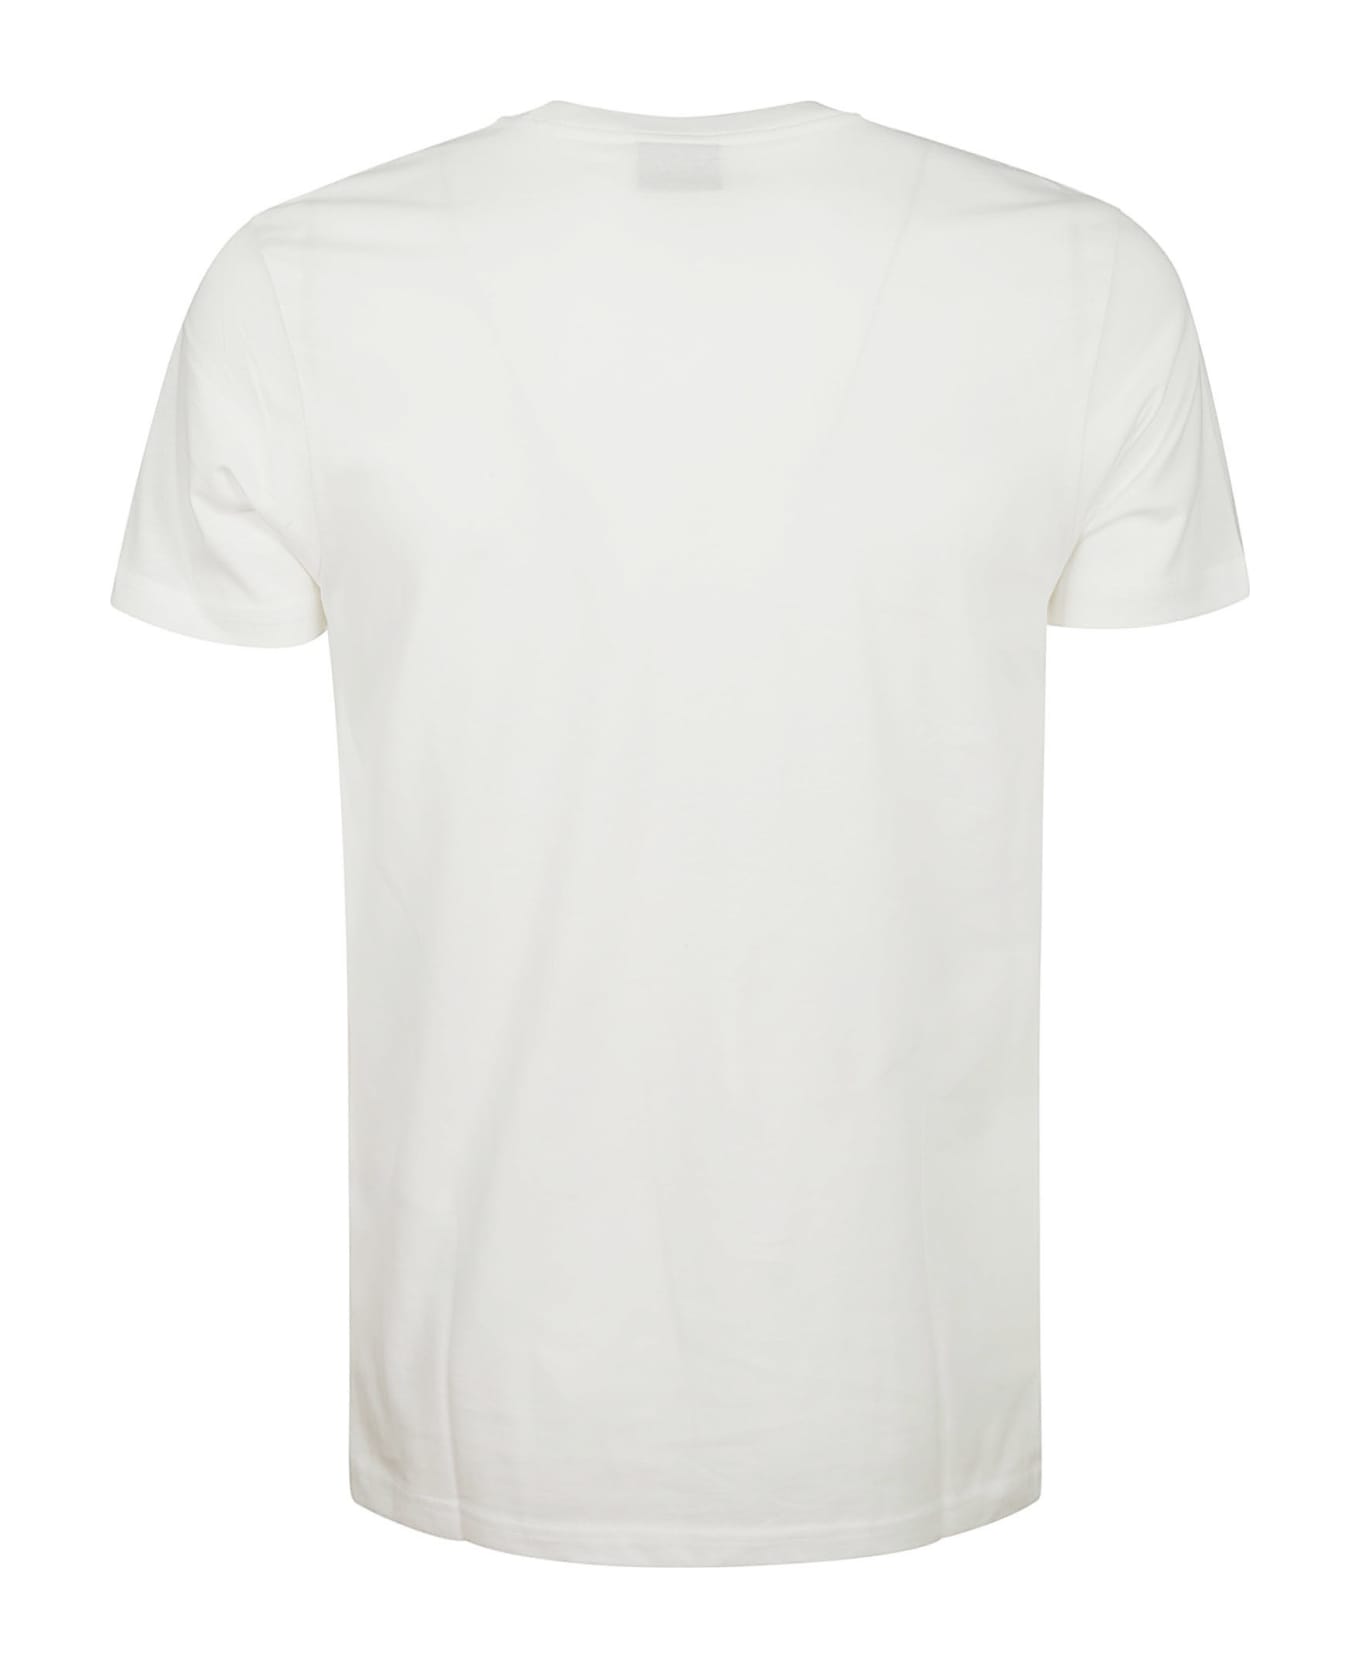 Paul Smith Slim Fit T-shirt Zebra - White